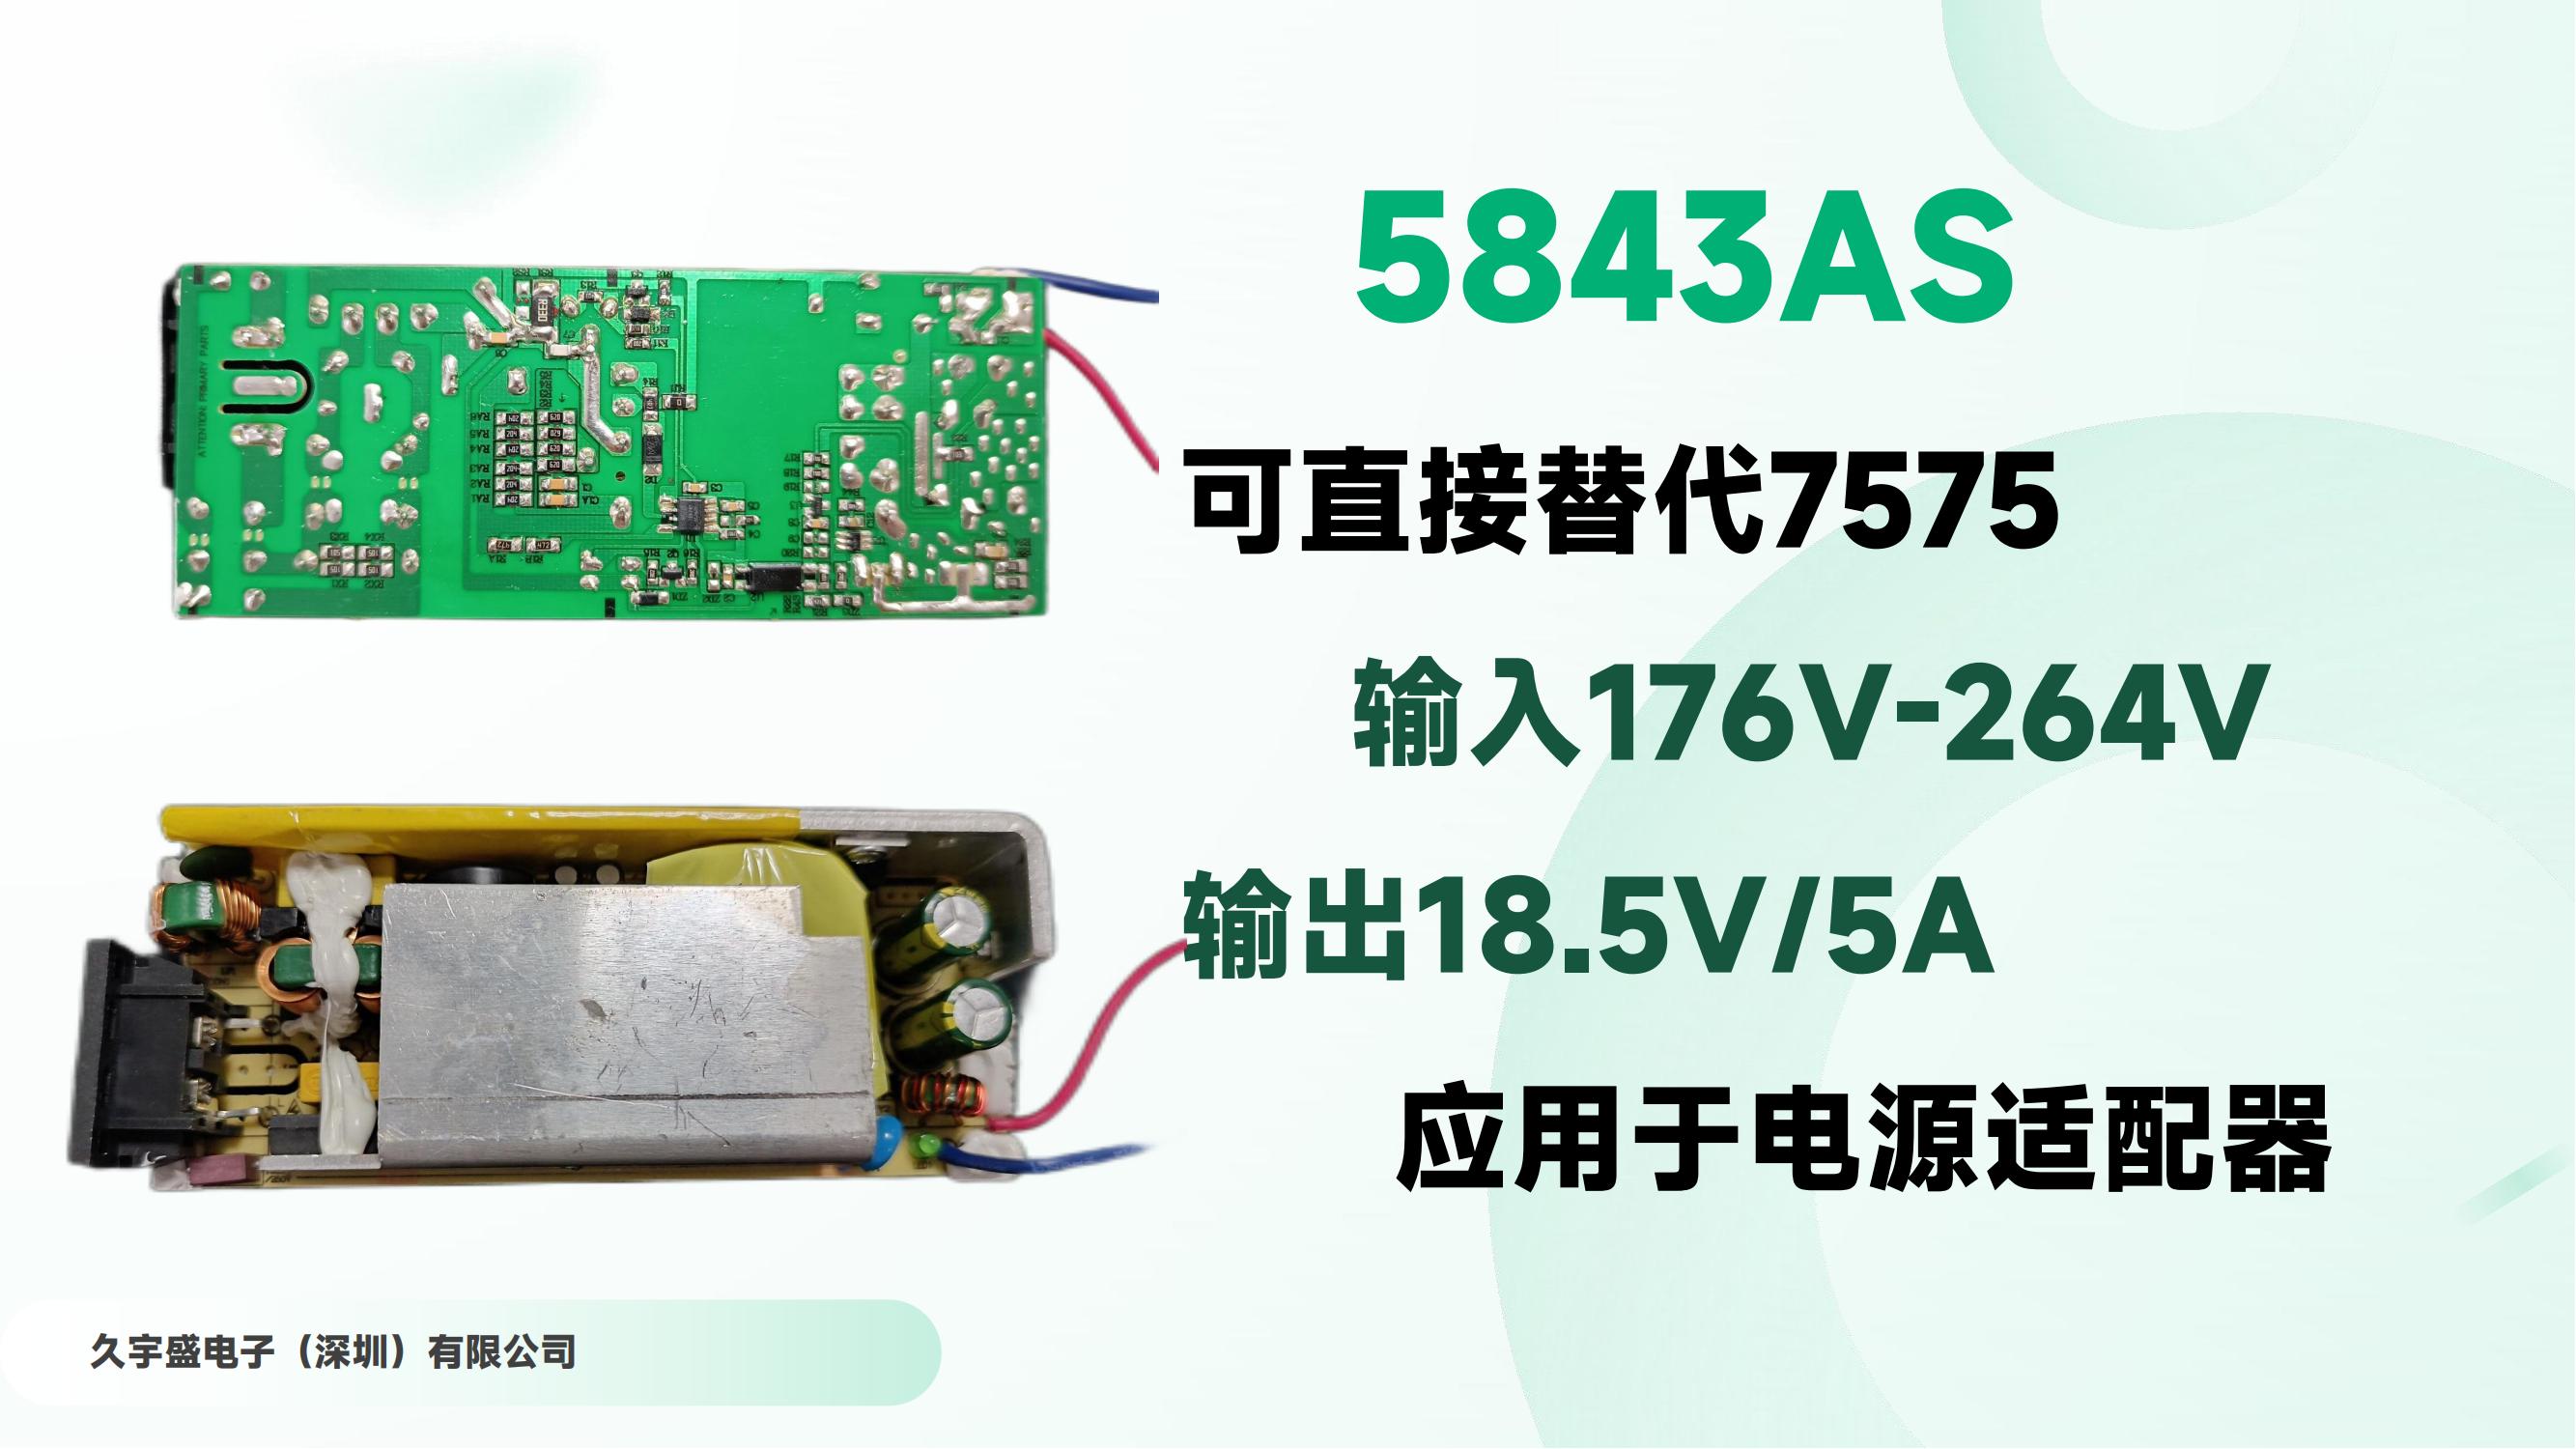 5843AS 可直接替代LD7575 , 输入176V-264V输出18.5V/5A# 电源适配器